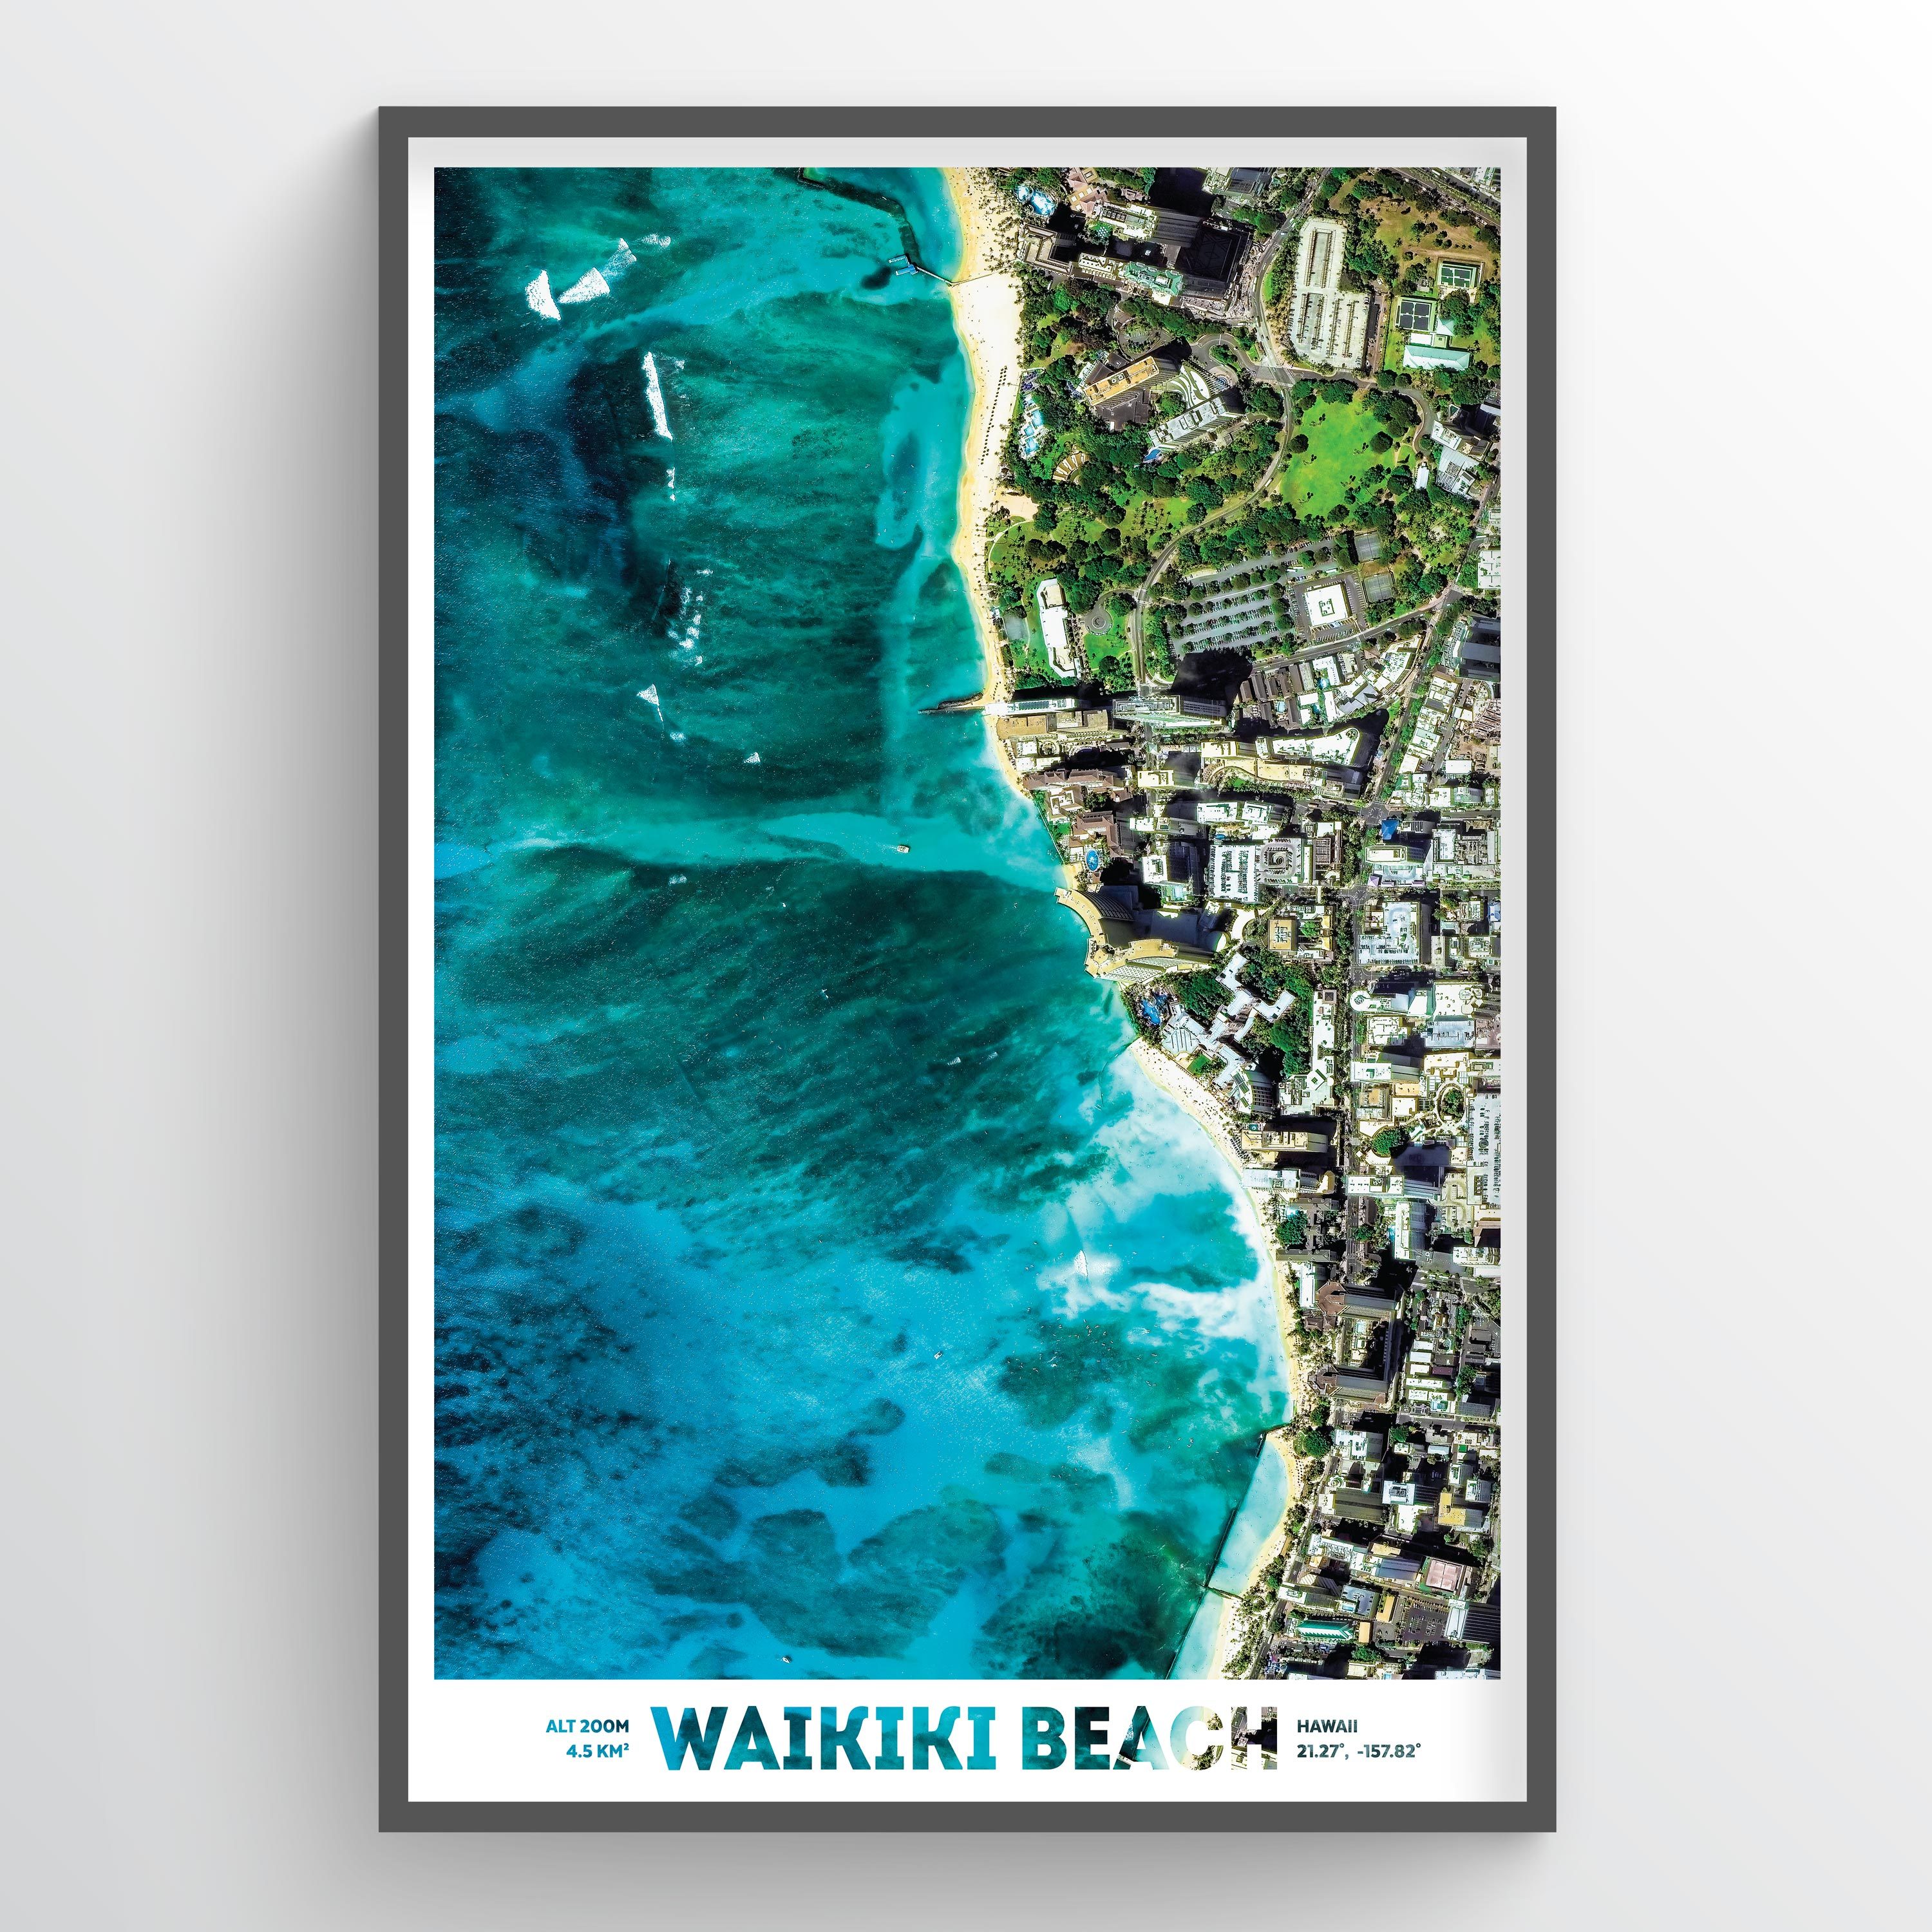 Fine Art Photography Prints of Waikiki Beach   Satellite Images of